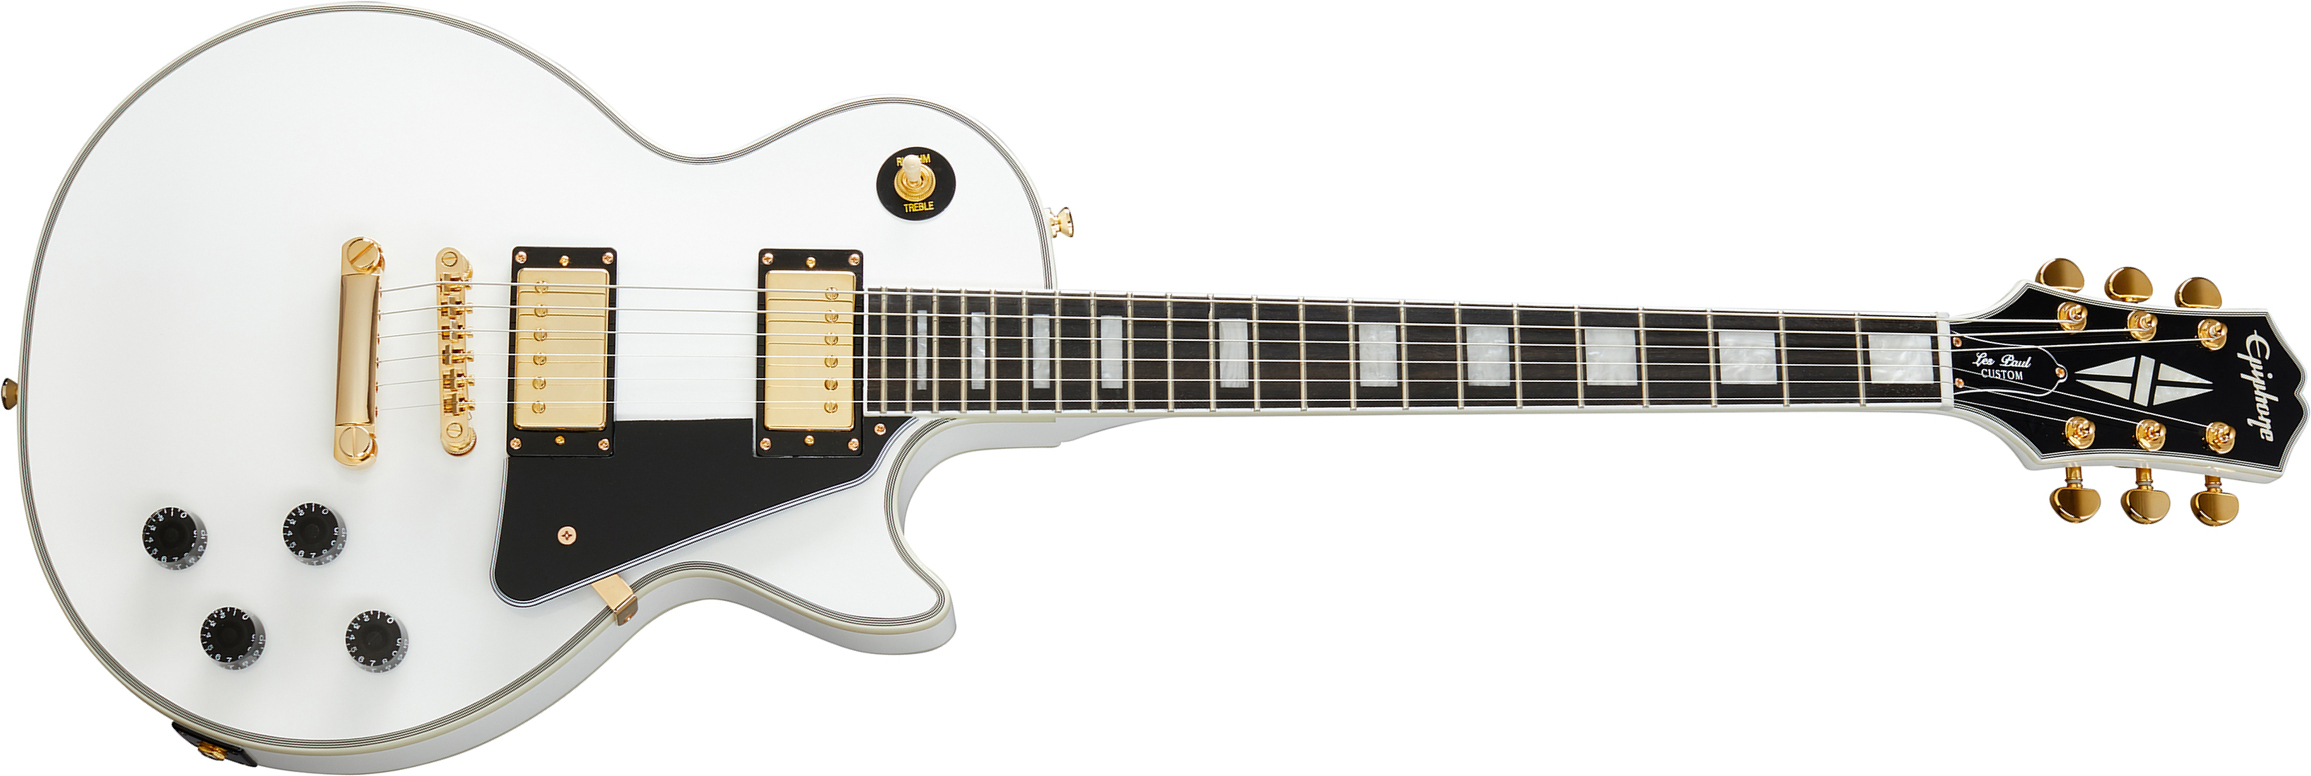 Epiphone Les Paul Custom 2h Ht Eb - Alpine White - Enkel gesneden elektrische gitaar - Main picture